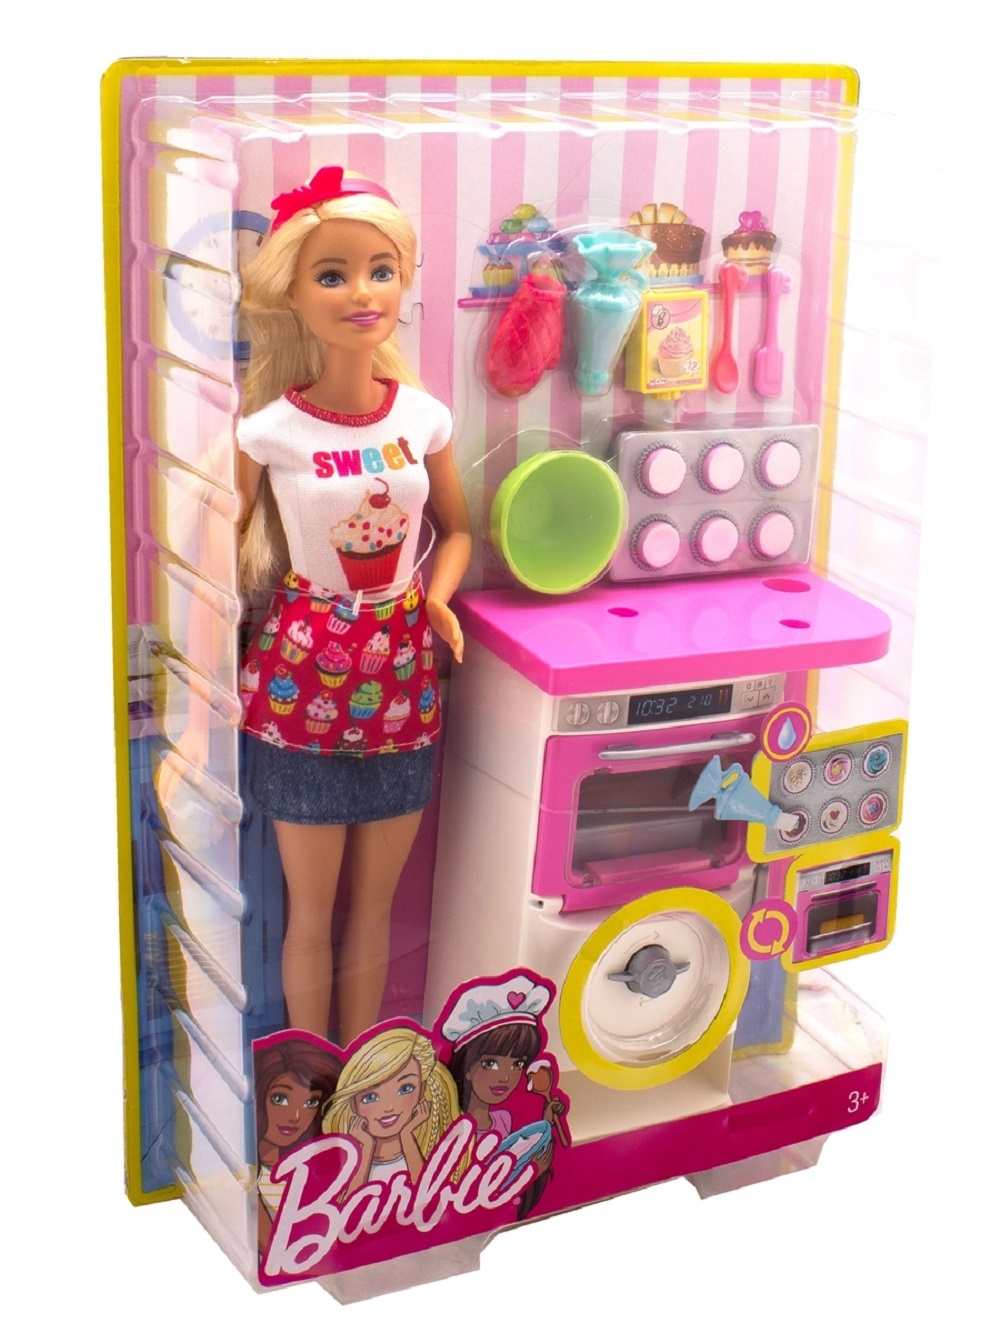 baking barbie doll